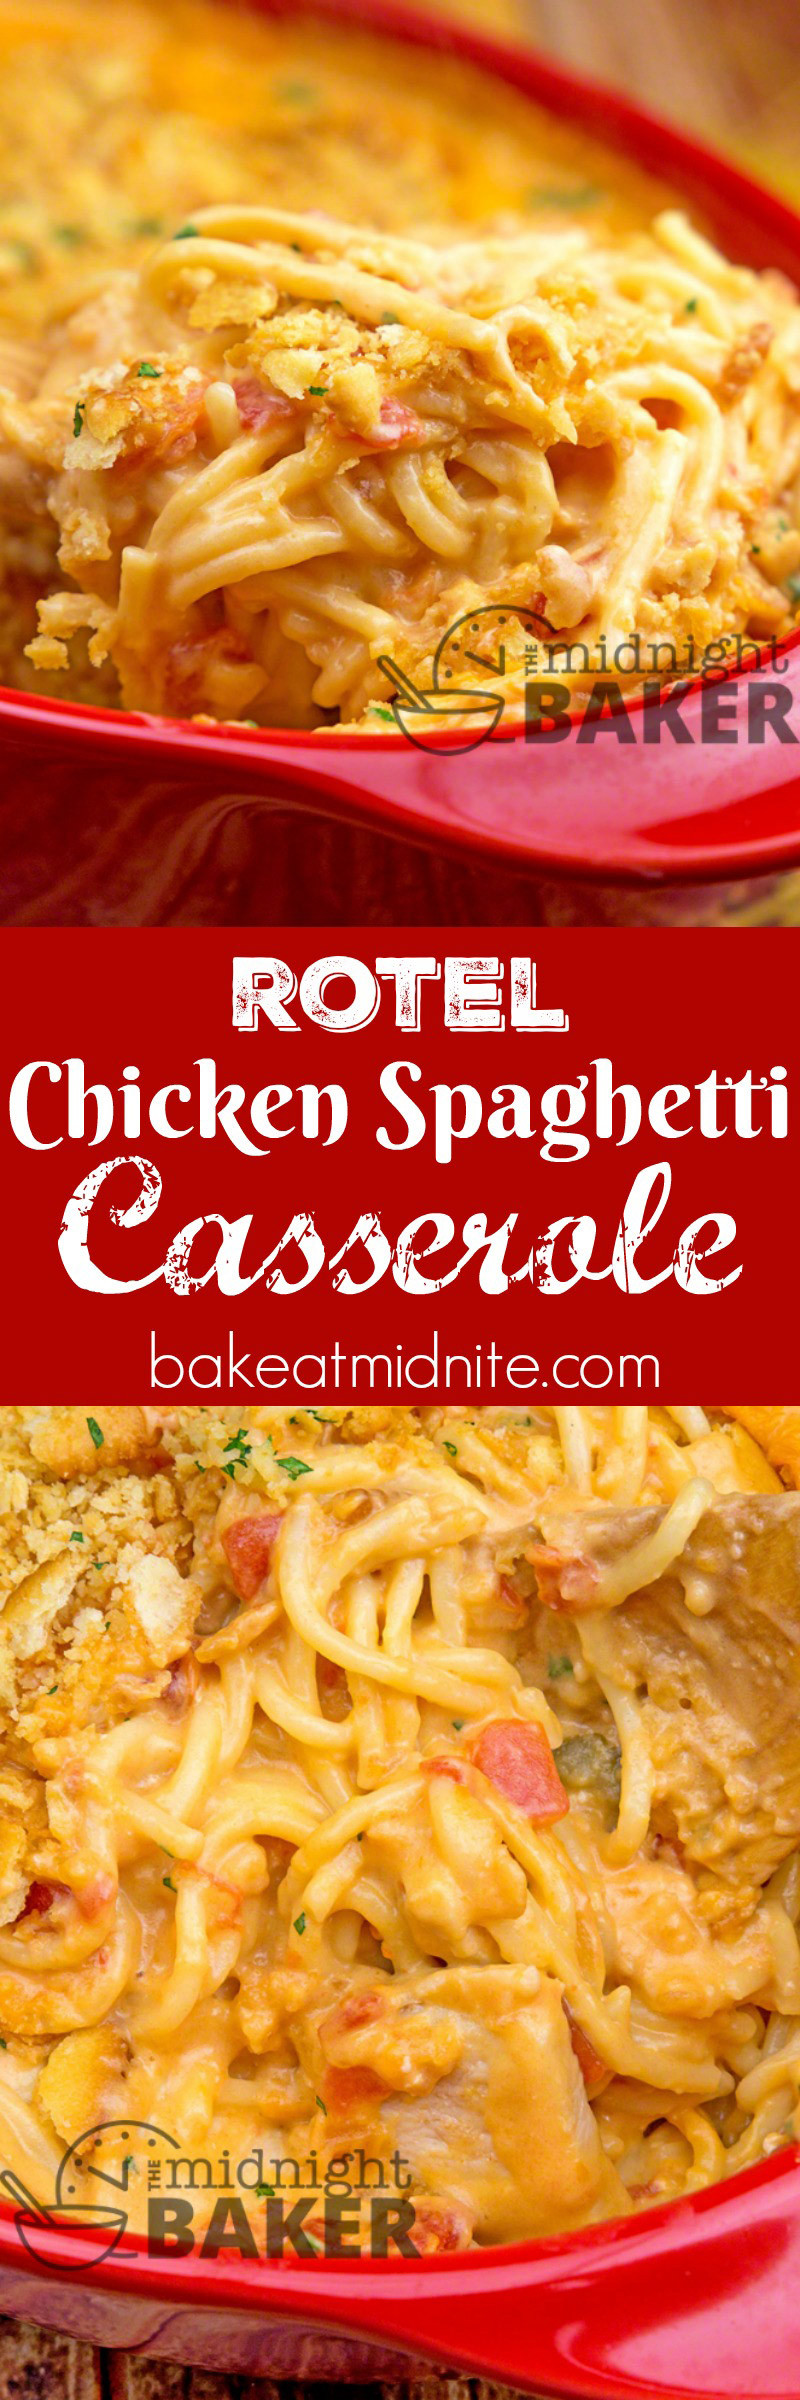 Chicken Rotel Casserole
 Rotel Chicken Spaghetti Casserole The Midnight Baker